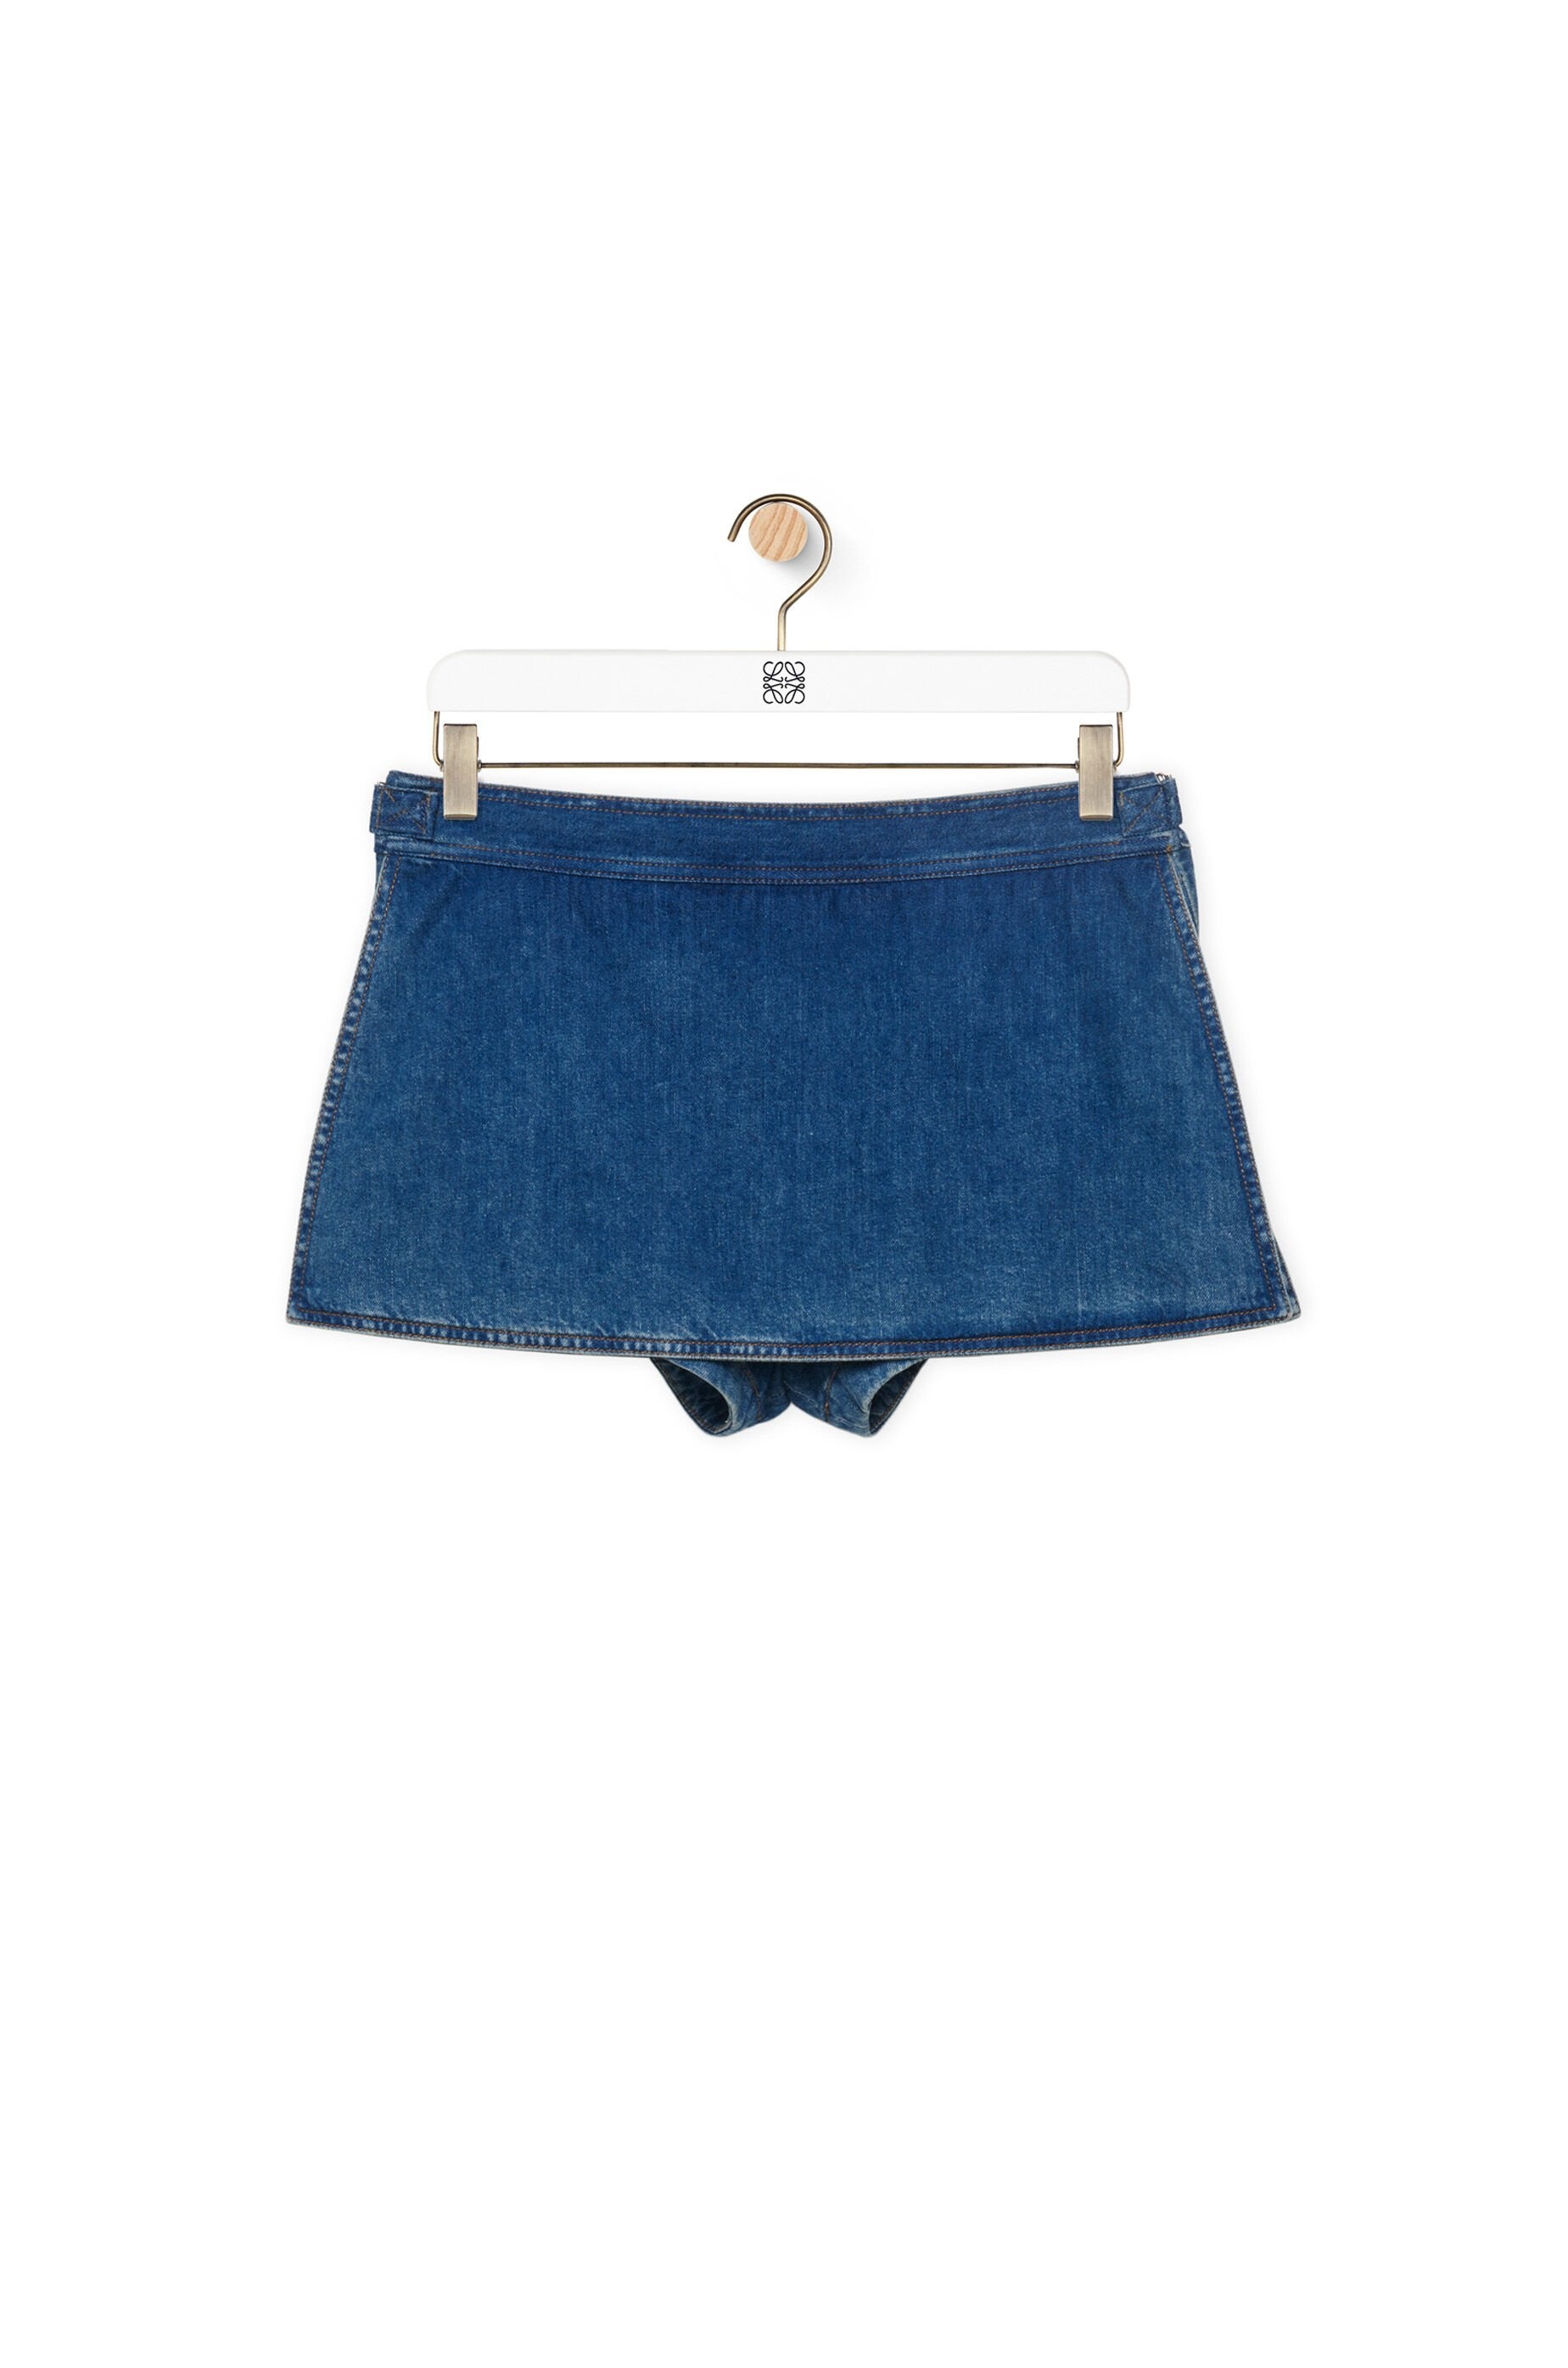 Anagram shorts in denim - 1